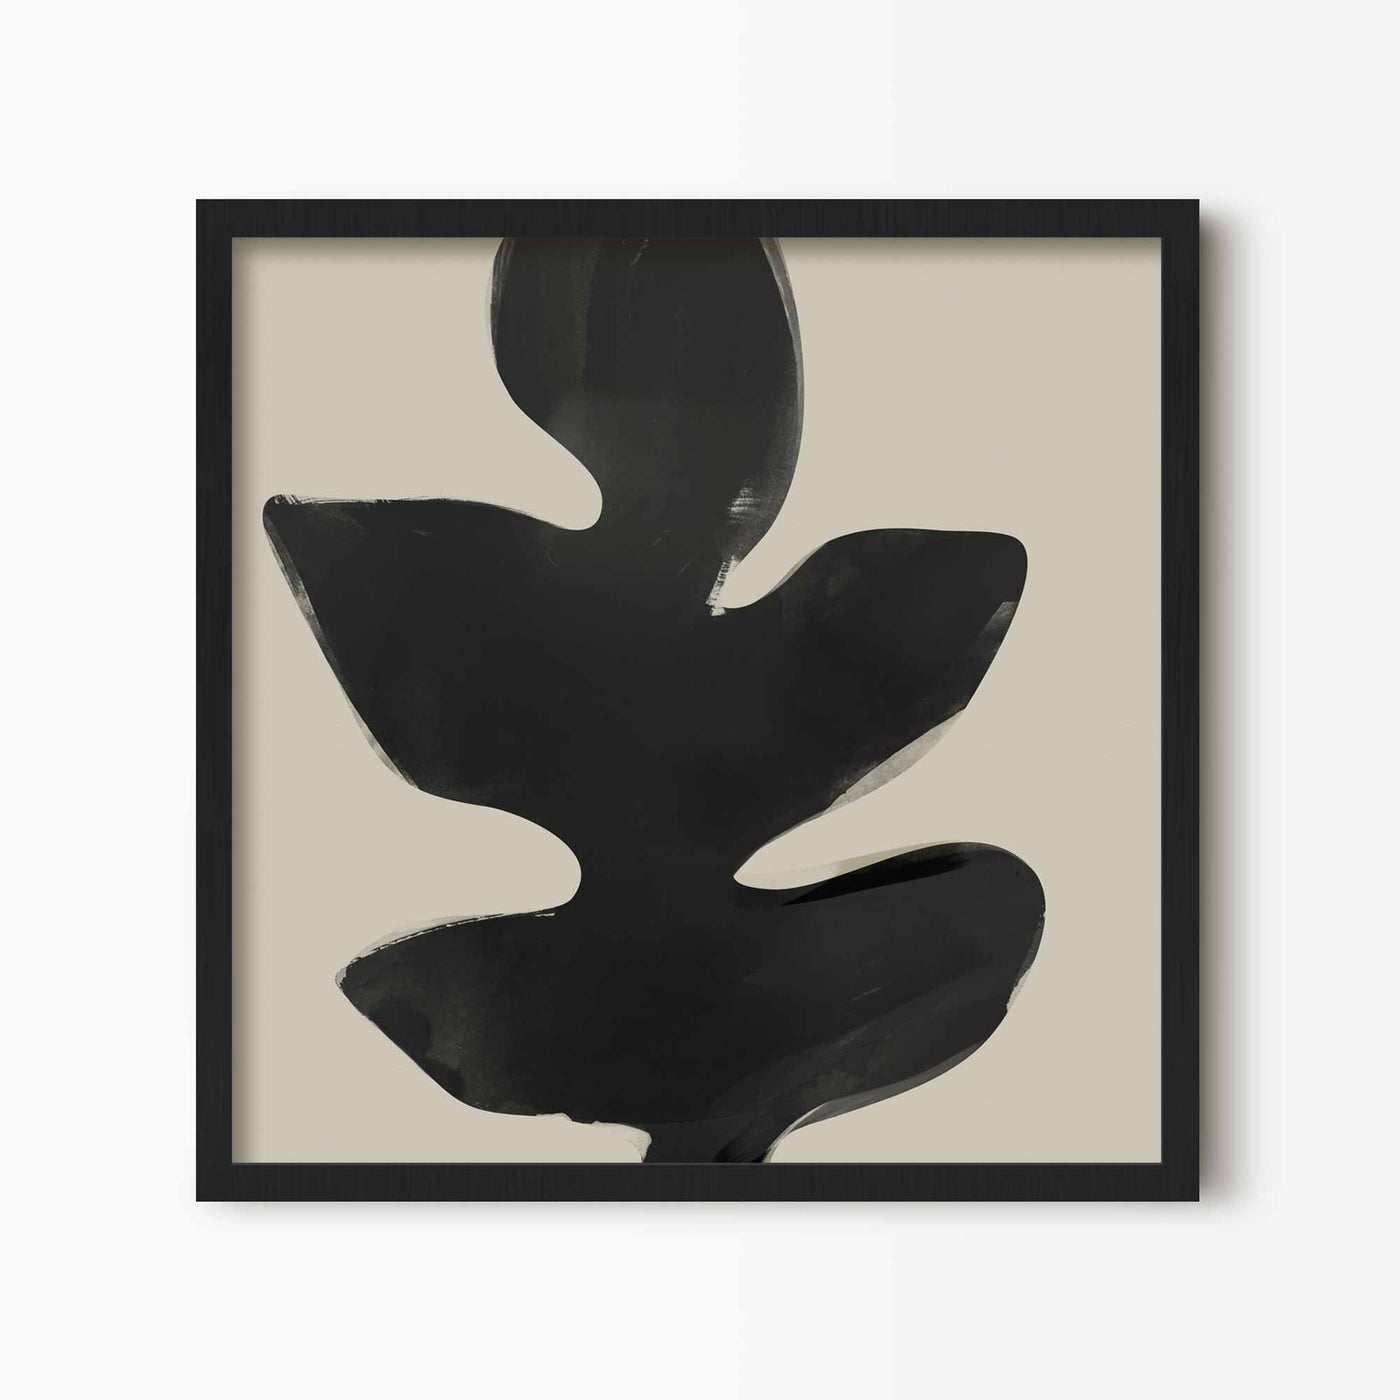 Green Lili 30x30cm (12x12") / Black Frame Big Leaf Abstract Art Print